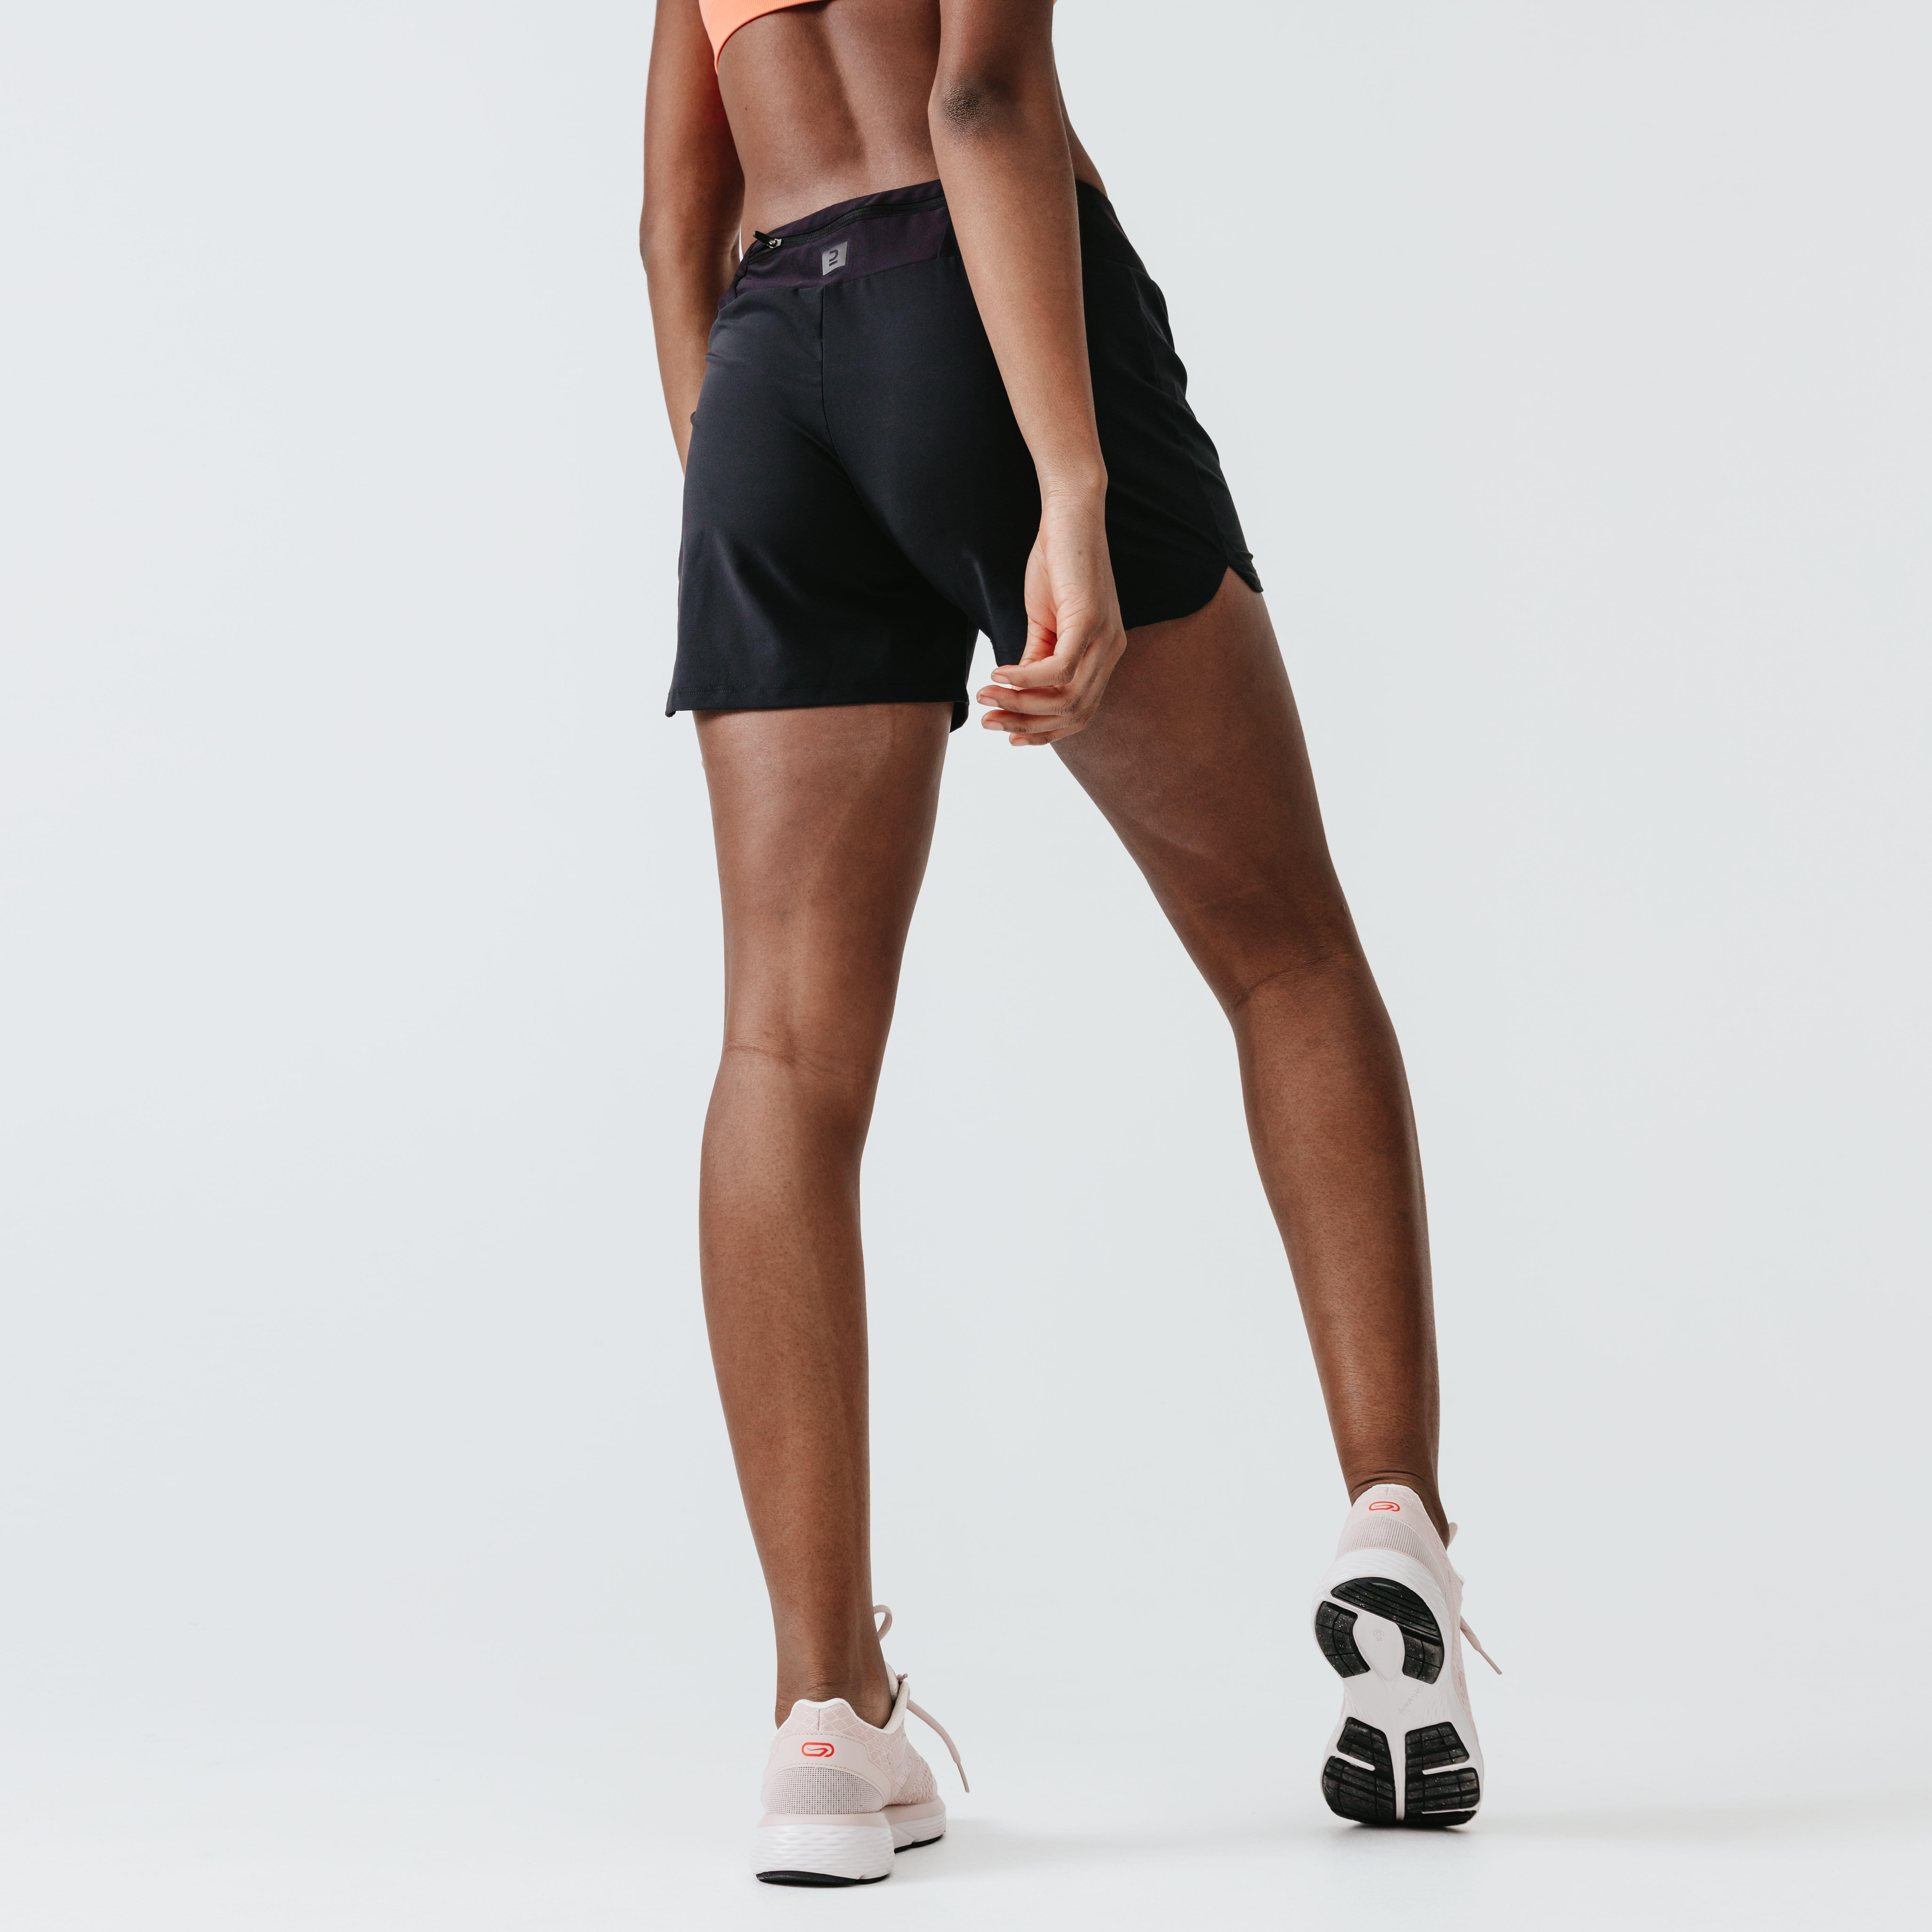 Dresime Sport Shorts Women Athletic Shorts Women Jogging